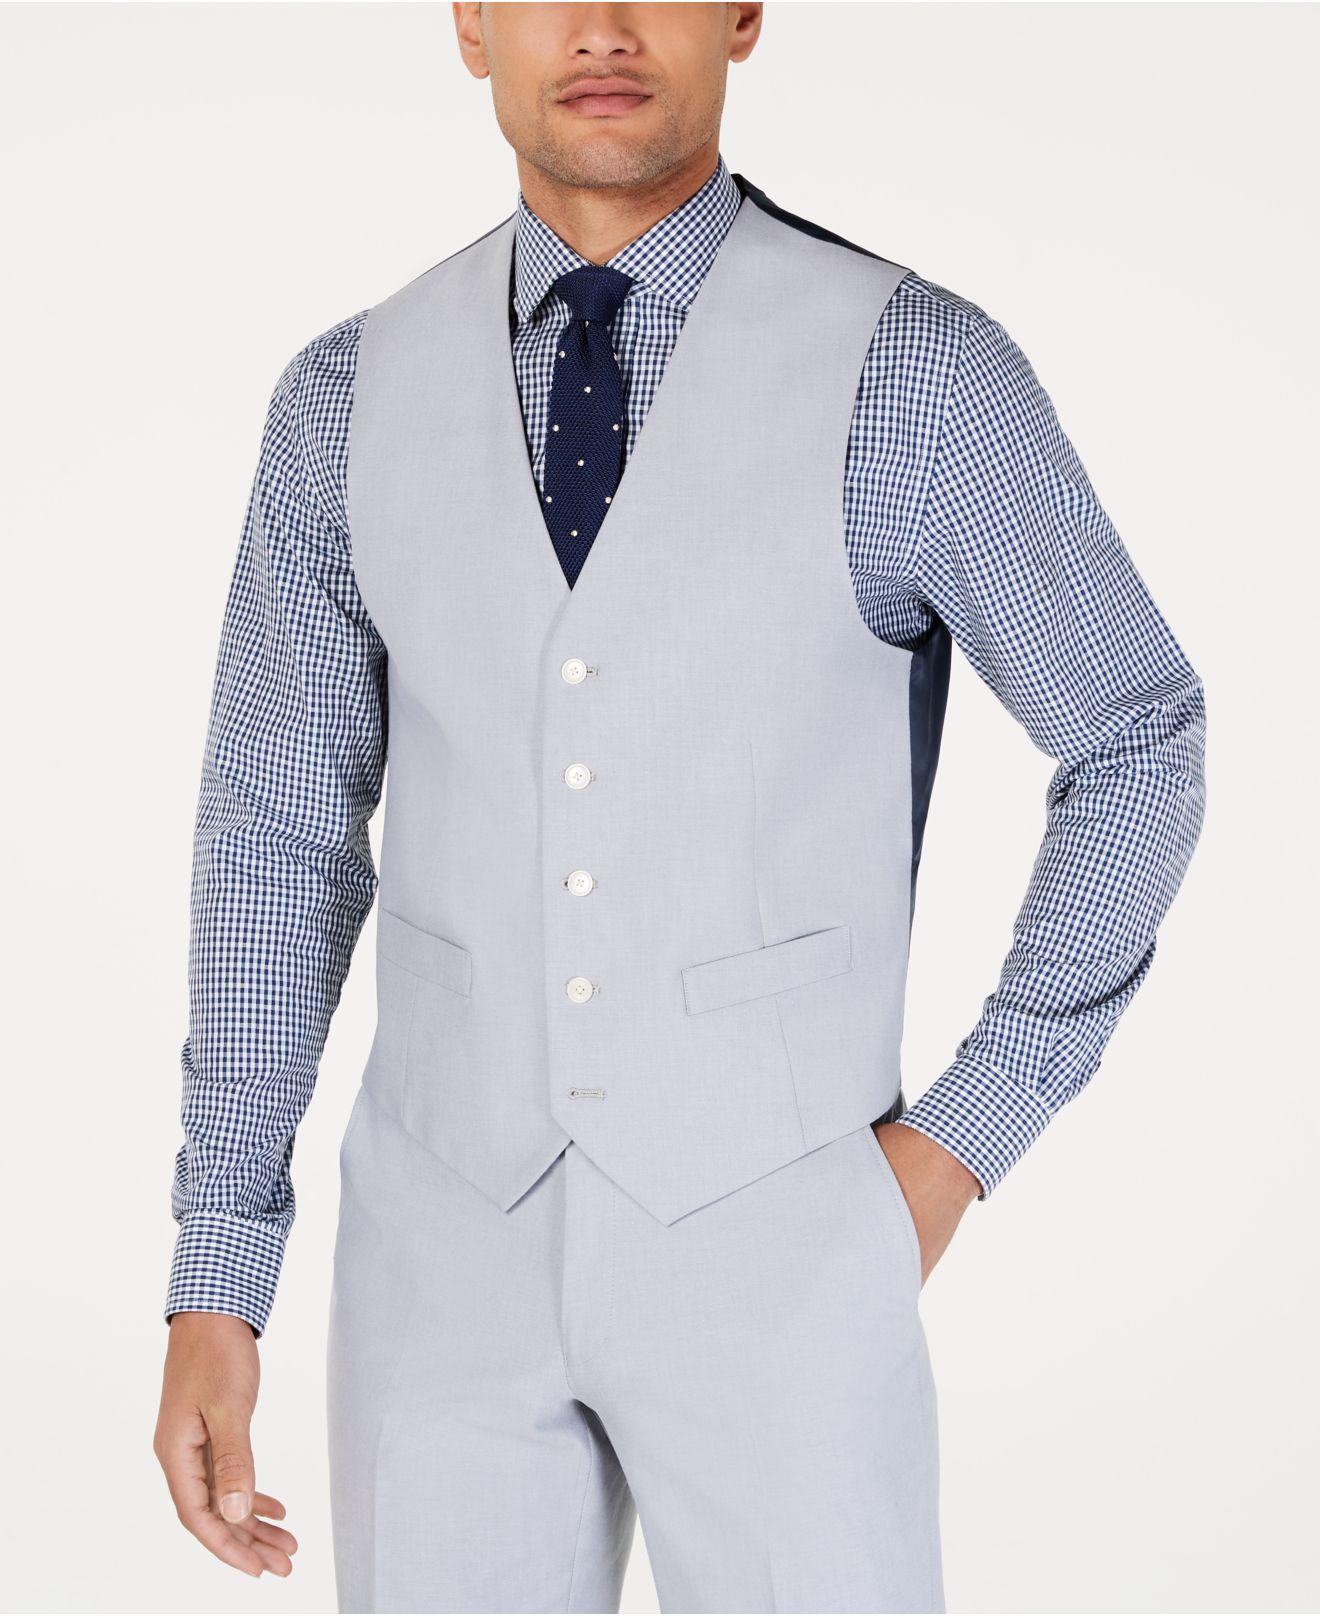 tommy hilfiger light grey suit